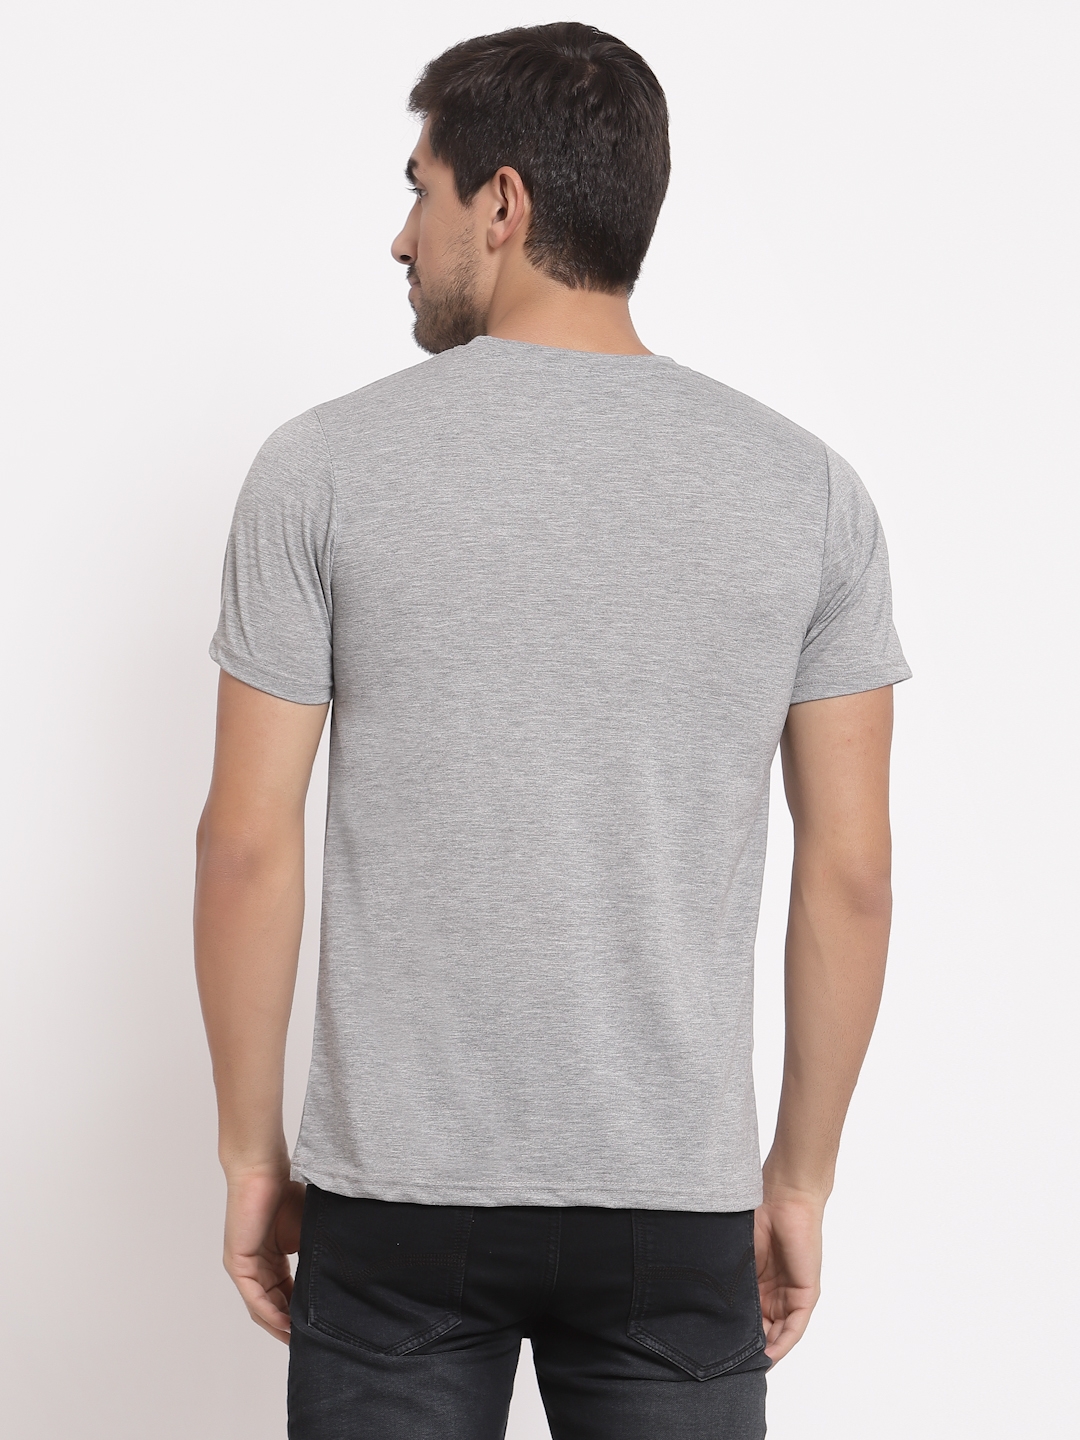 HEATHEX | HEATHEX Cotton Blend Printed Half Sleeve Light Grey T-Shirt for Men 1